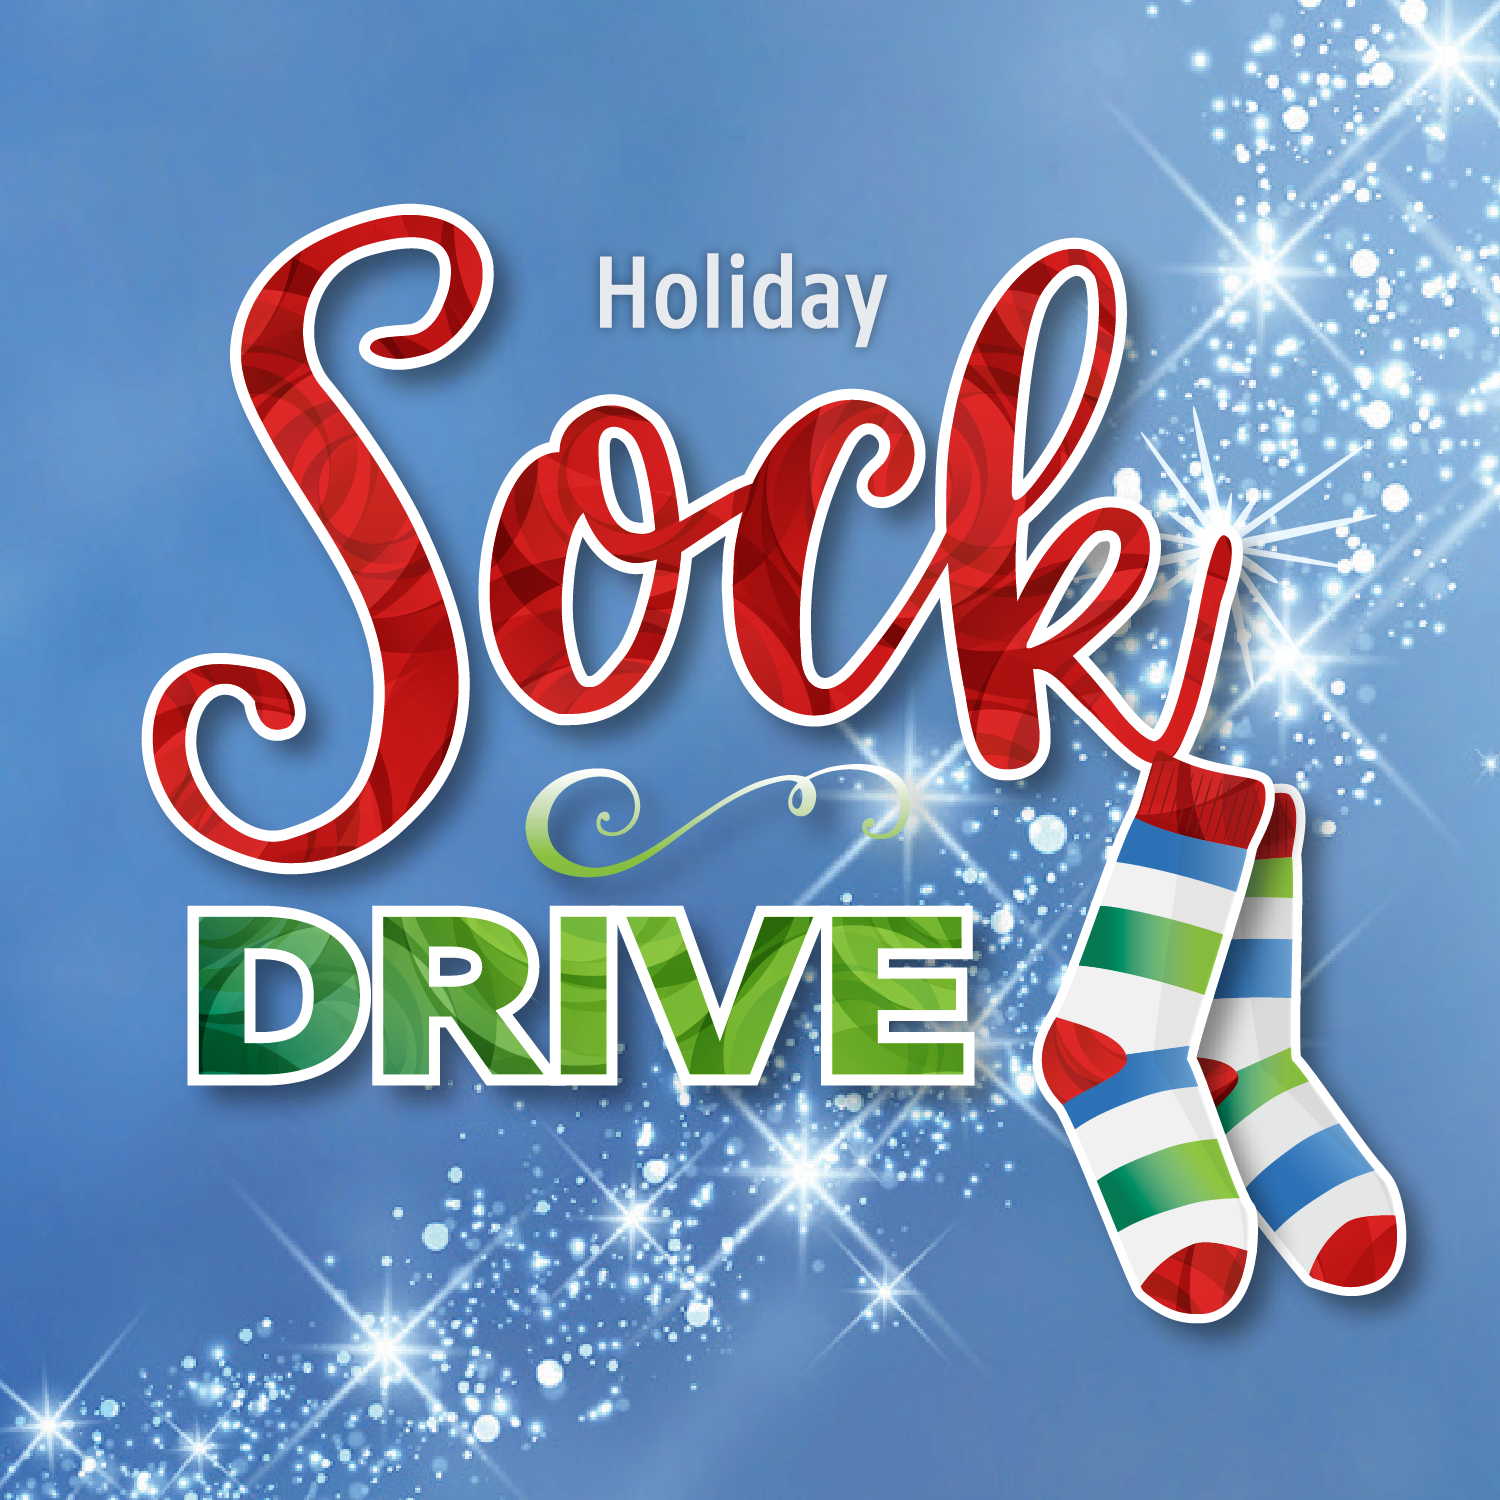 Holiday sock drive logo